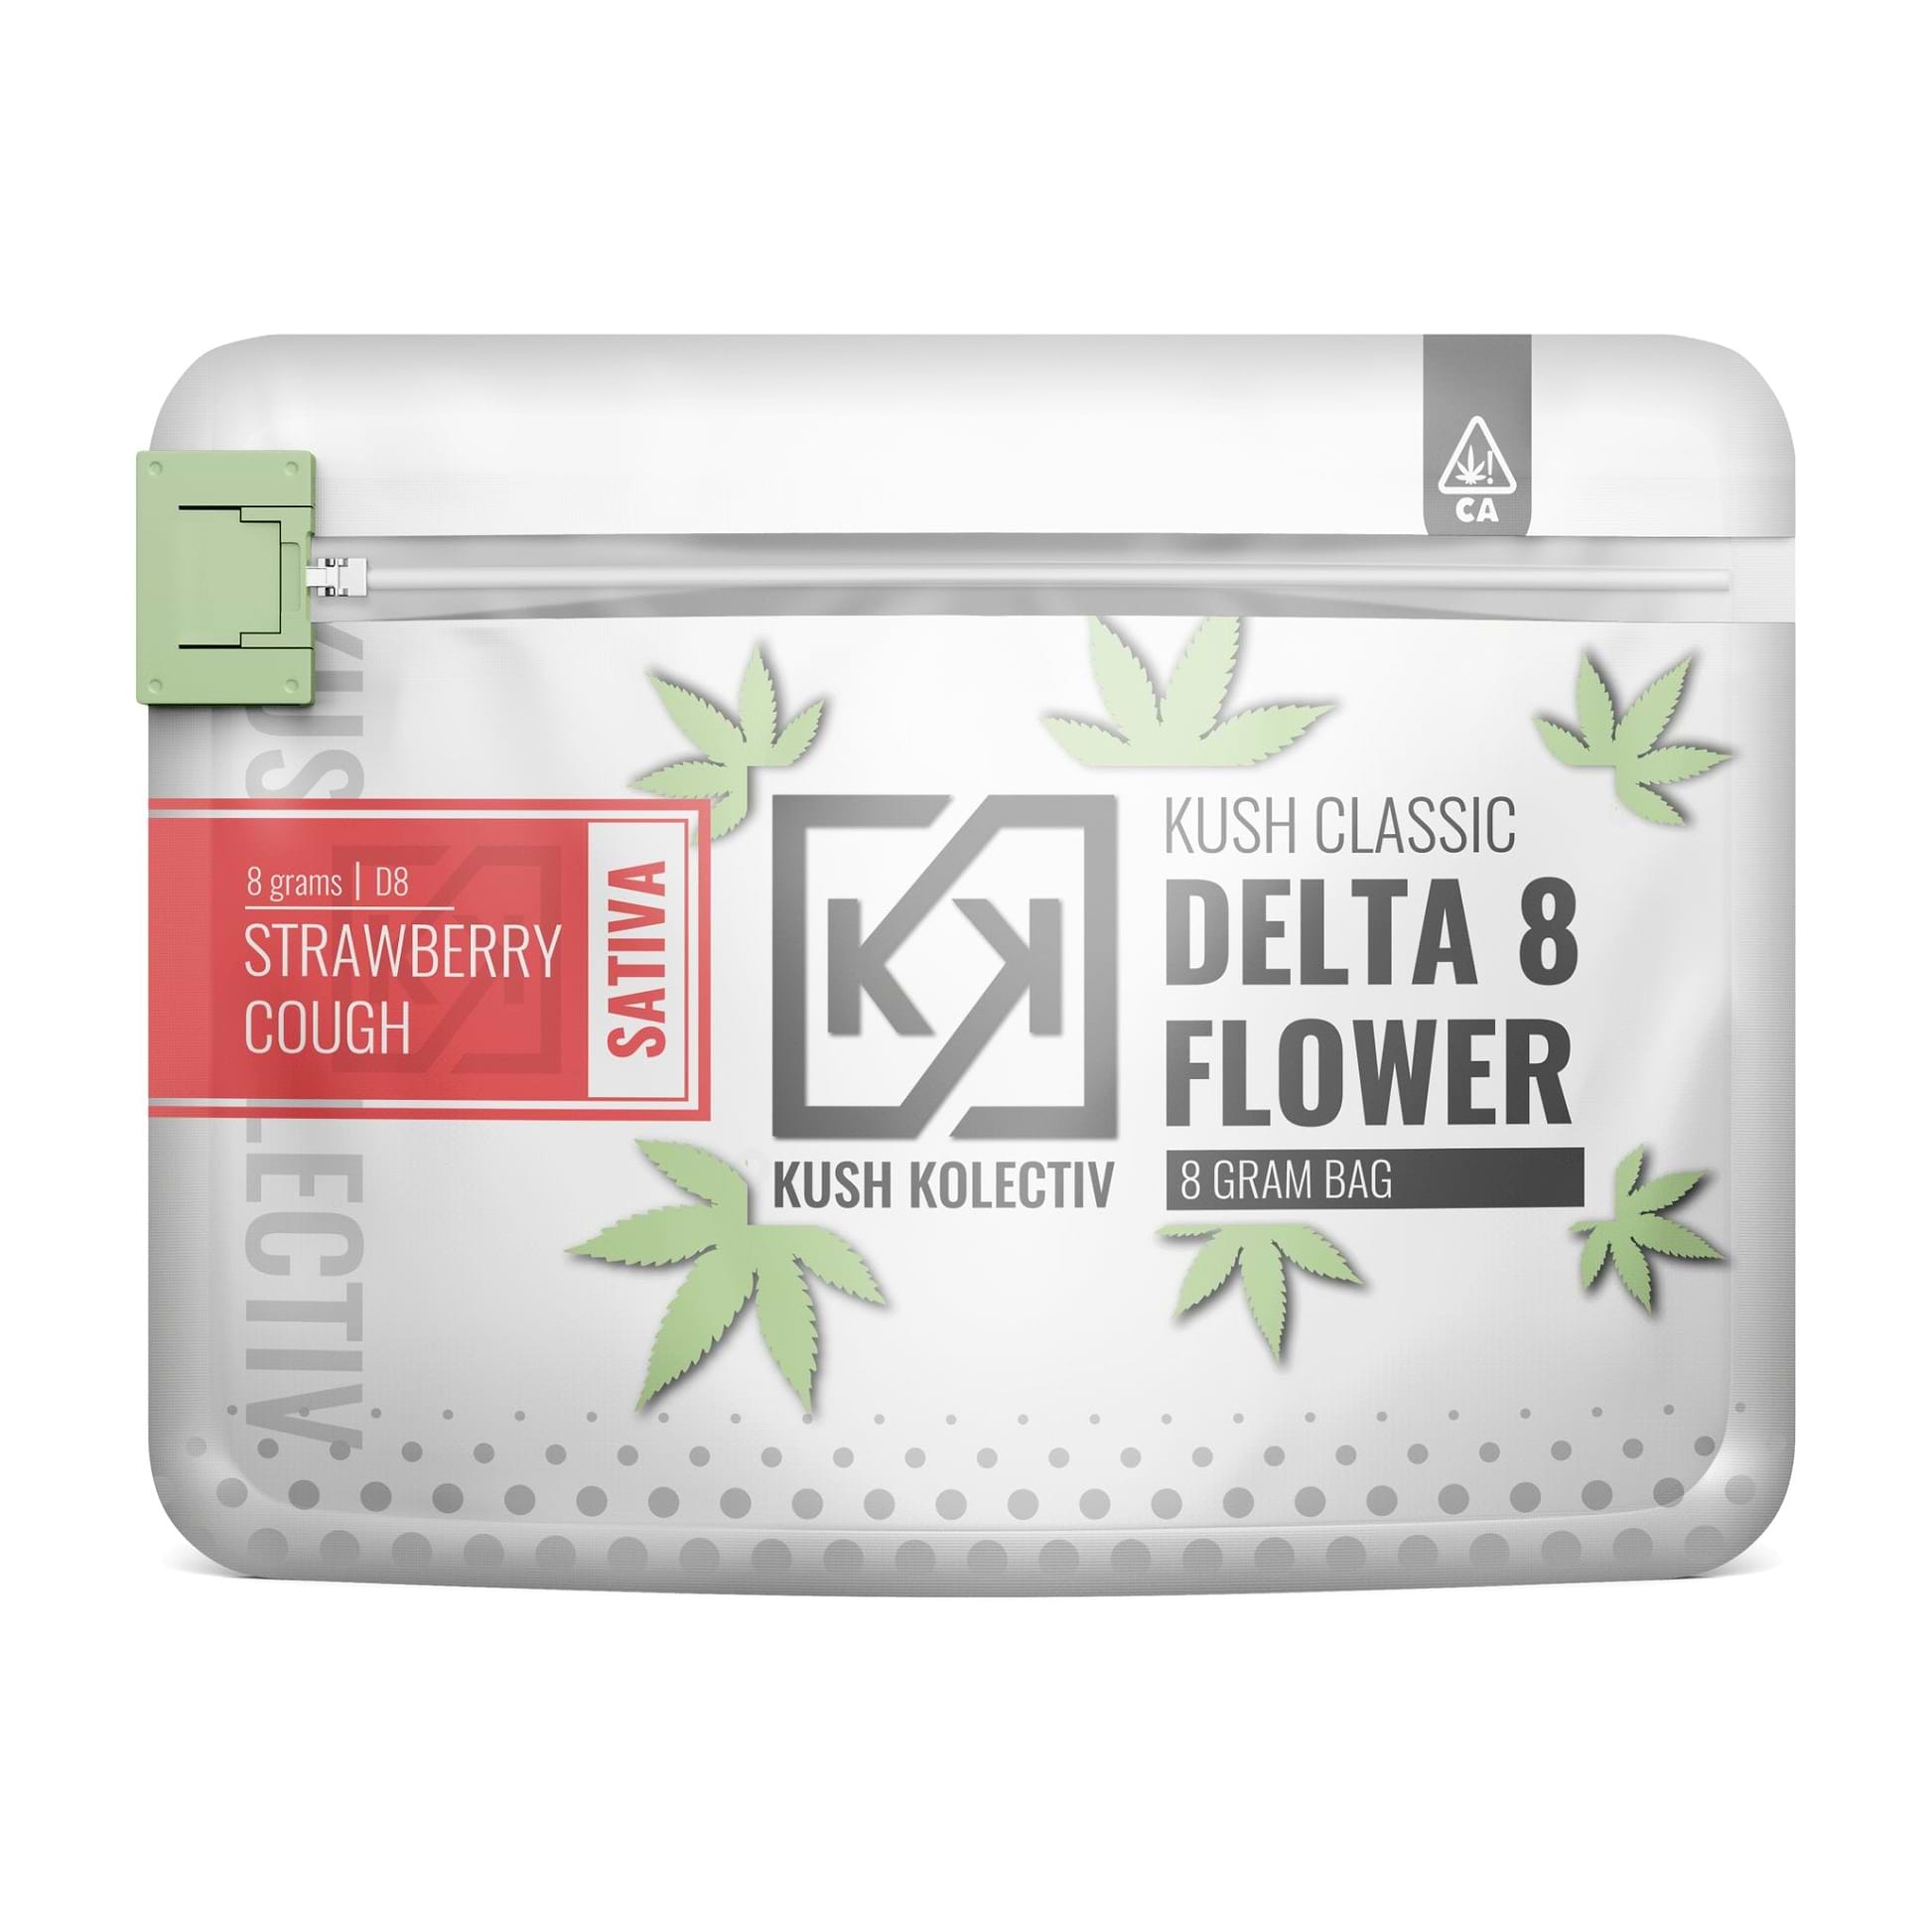 Kush Kolectiv Delta 8 Flower 8000mg / Strawberry Cough / Sativa